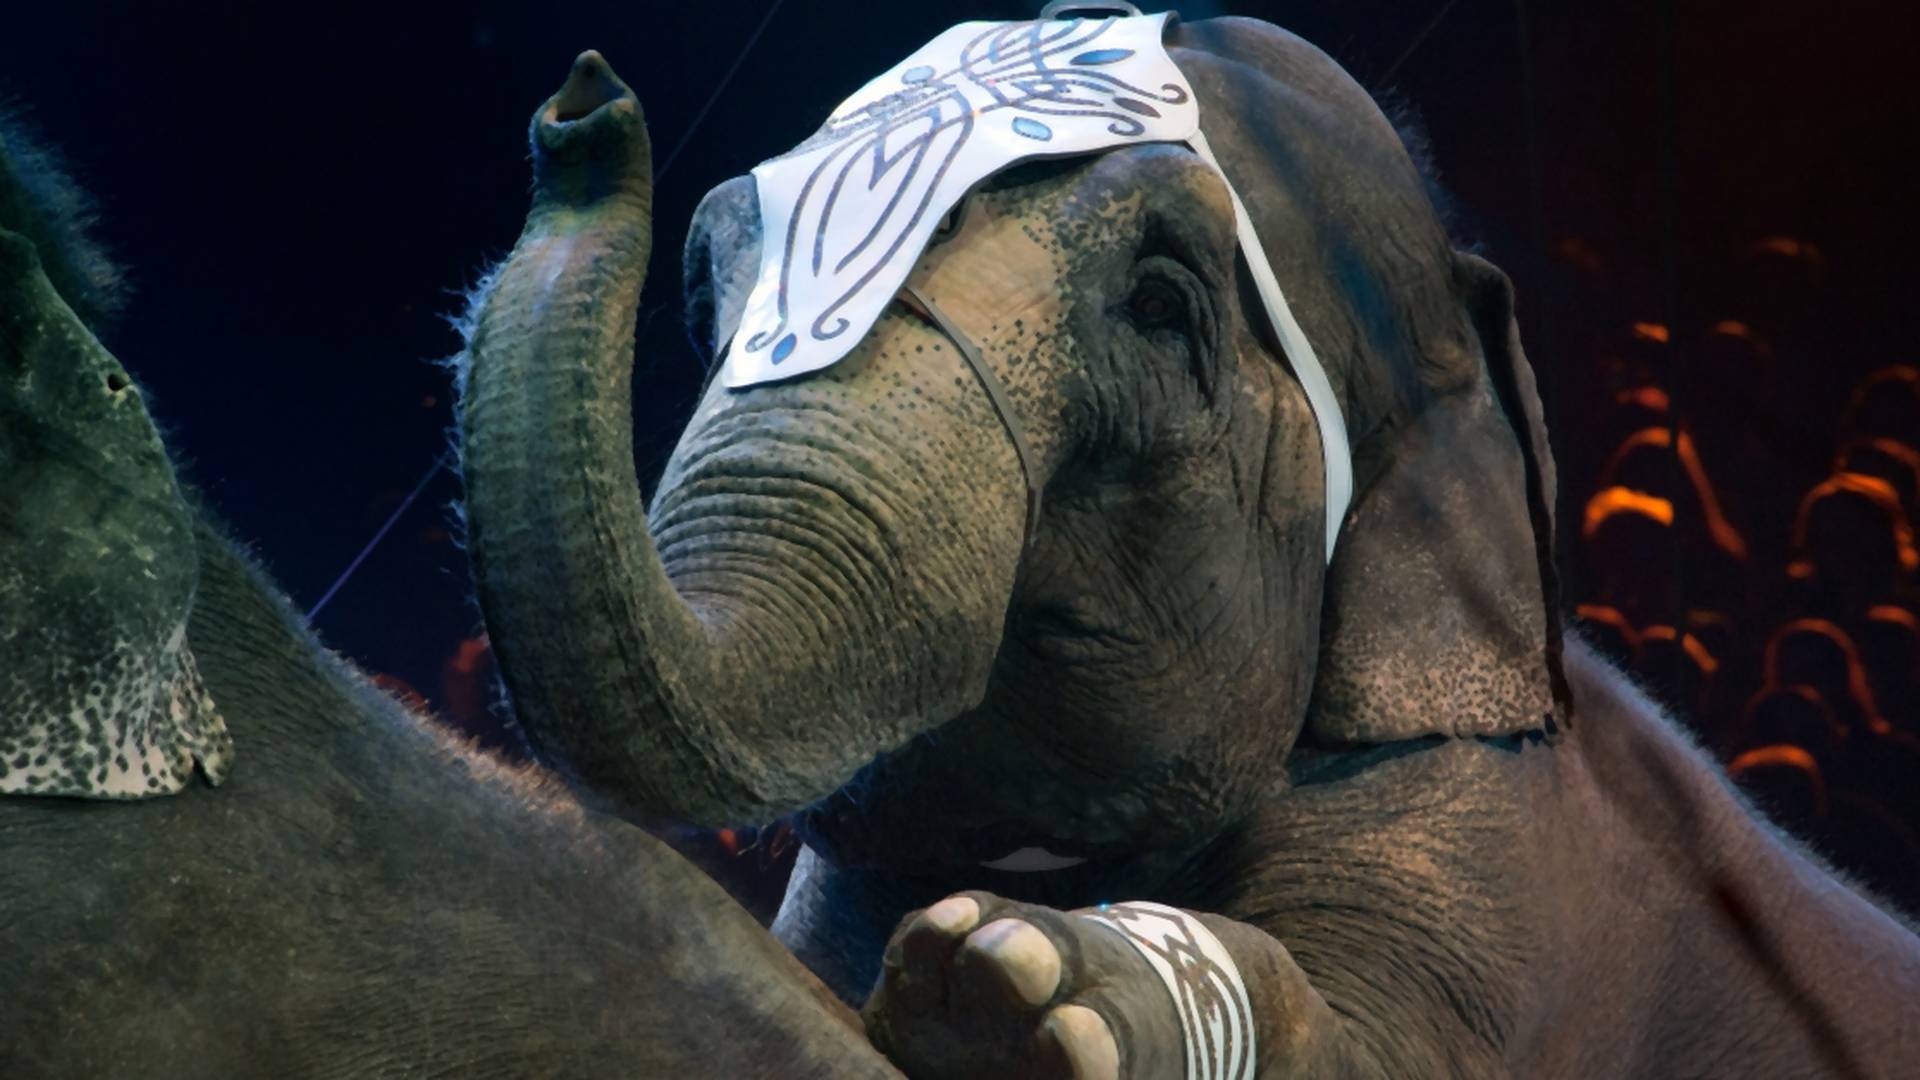 New Jersey oficiálne zakázalo vystupovanie divokých zvierat v cirkusoch